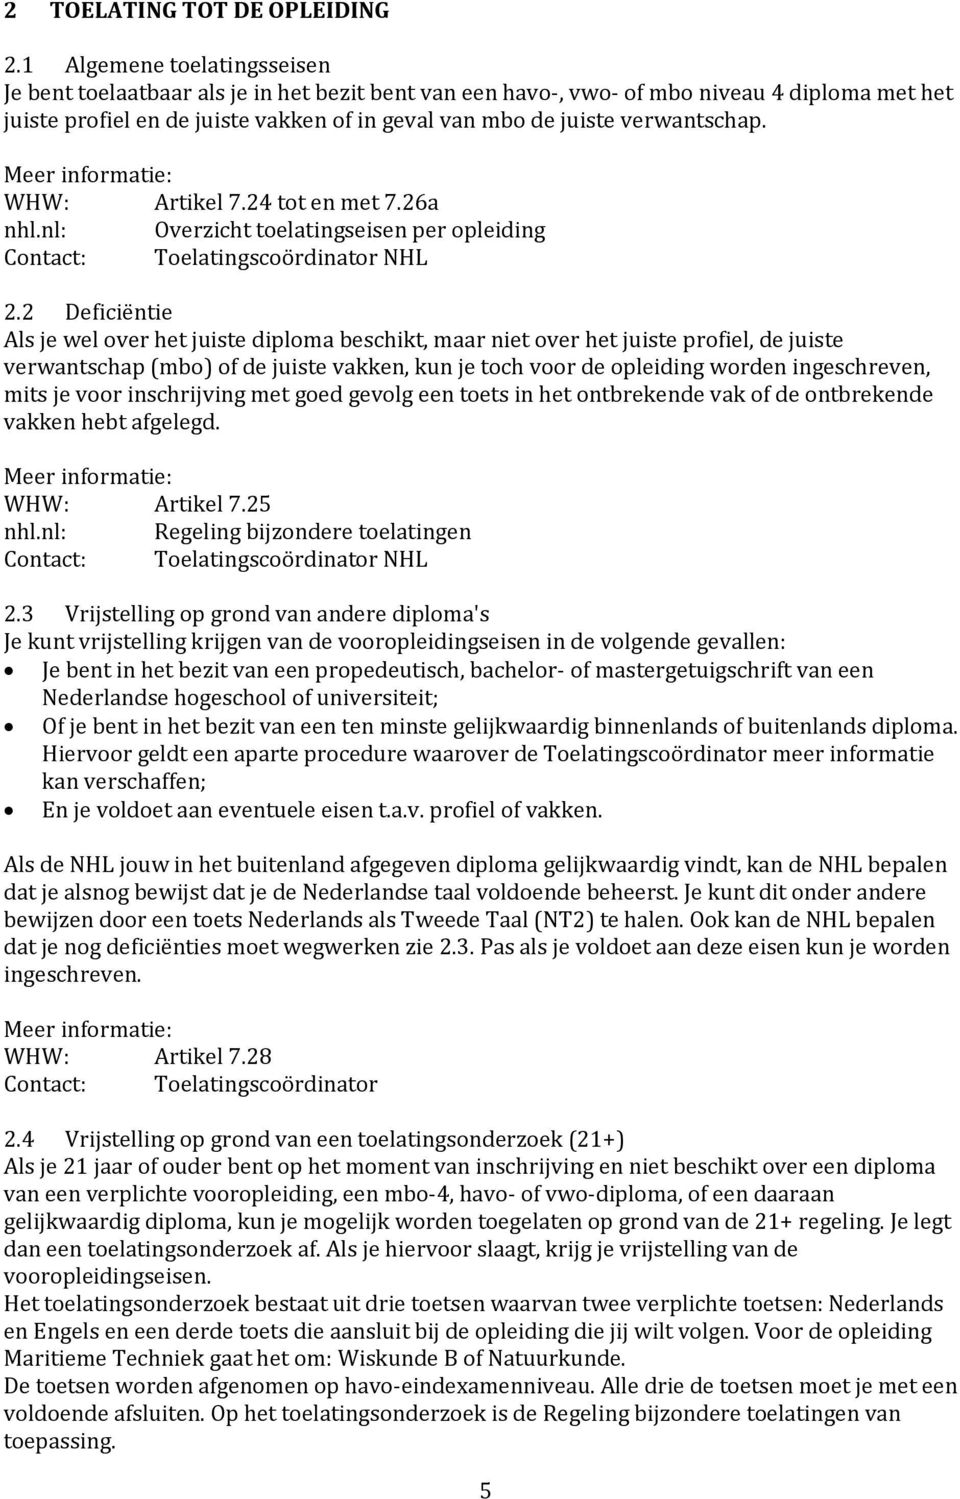 verwantschap. WHW: Artikel 7.24 tot en met 7.26a nhl.nl: Overzicht toelatingseisen per opleiding Contact: Toelatingscoördinator NHL 2.